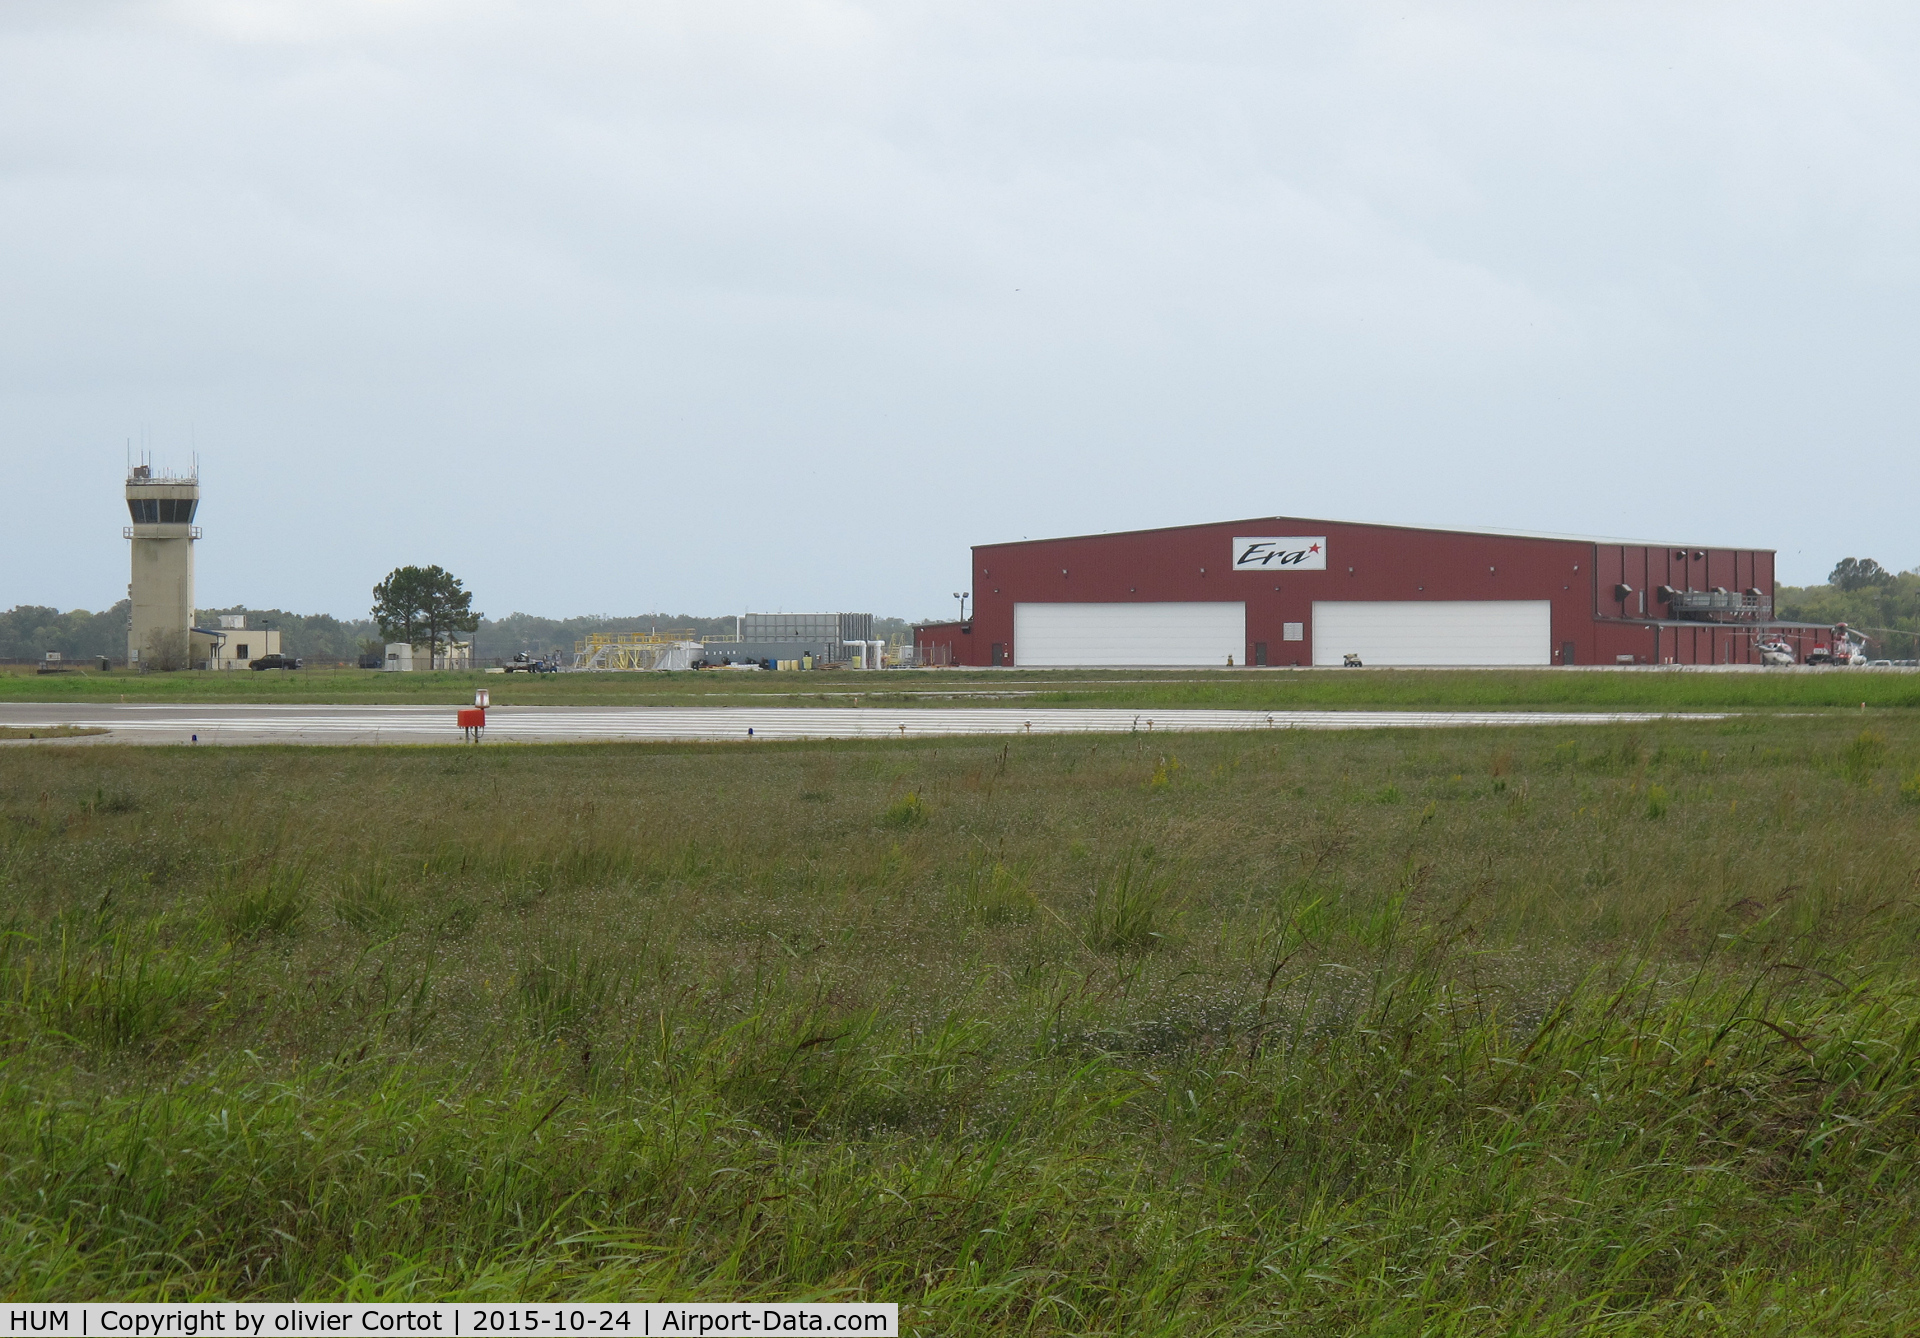 Houma-terrebonne Airport (HUM) - one of the many hangars on site